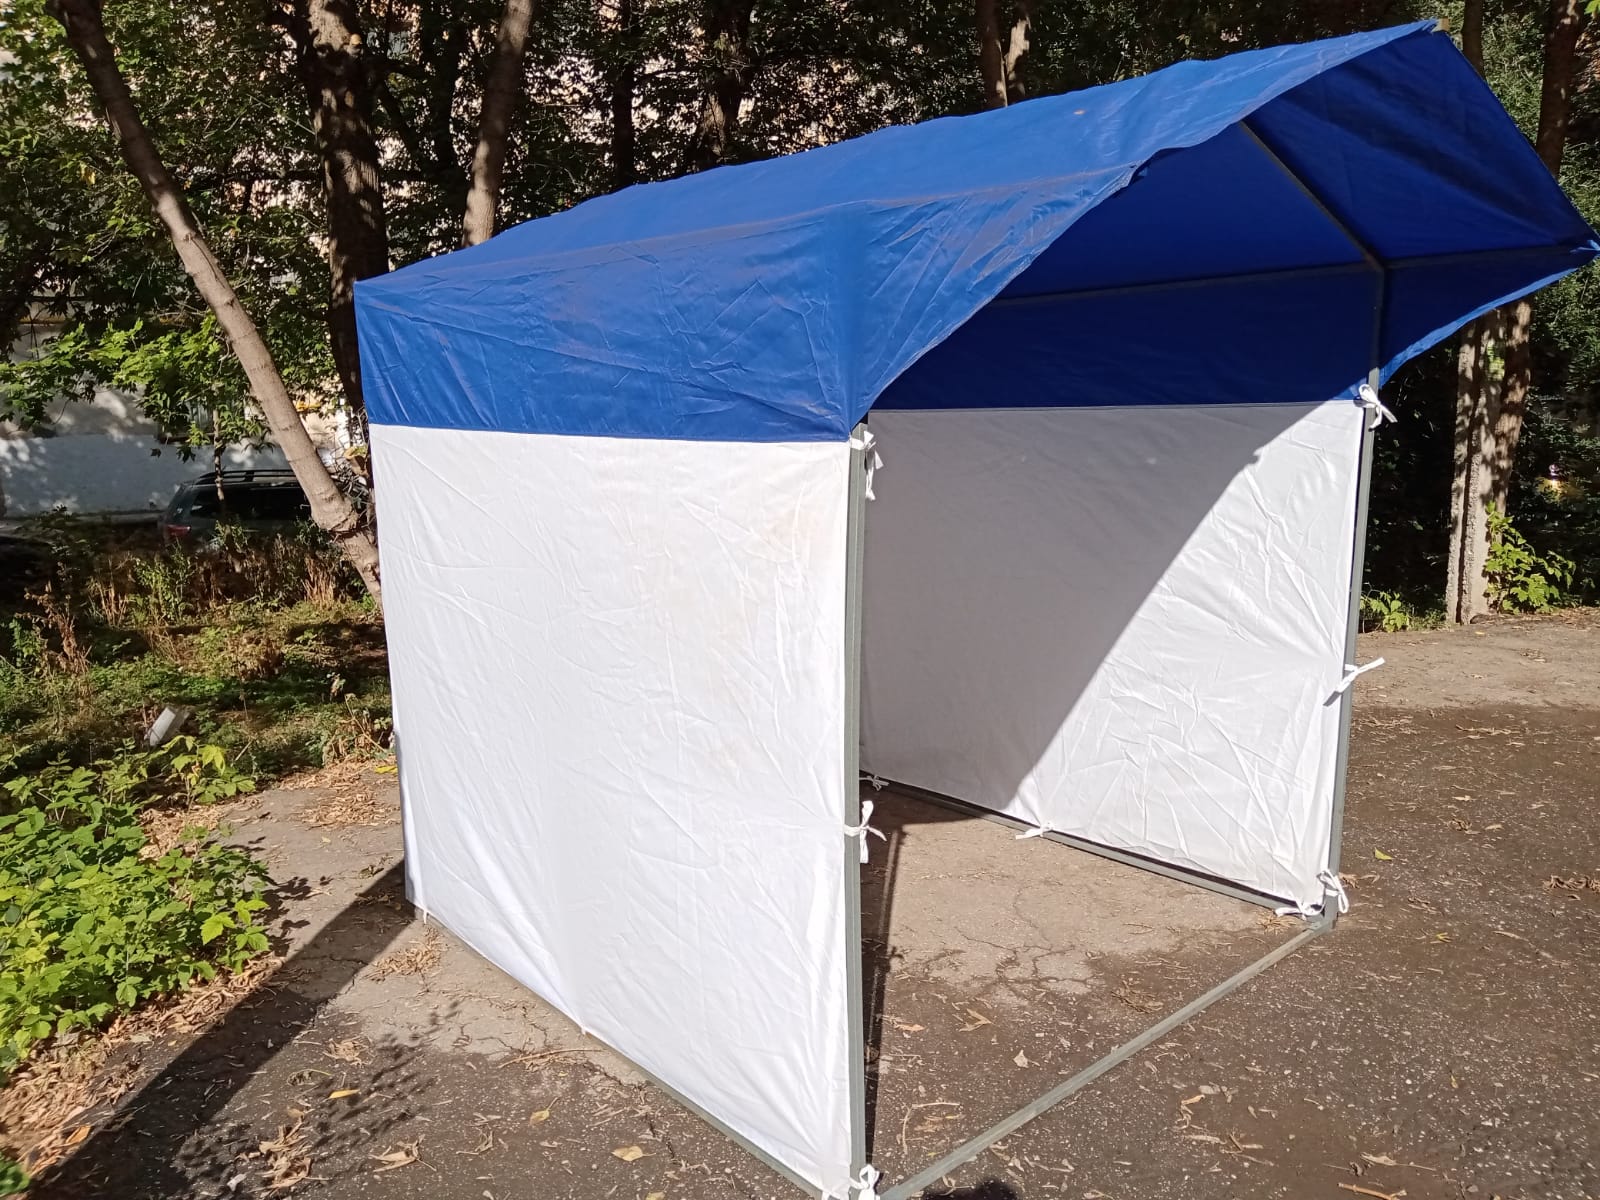 Аренда: Торговая палатка 2 х 2 (24 кг)